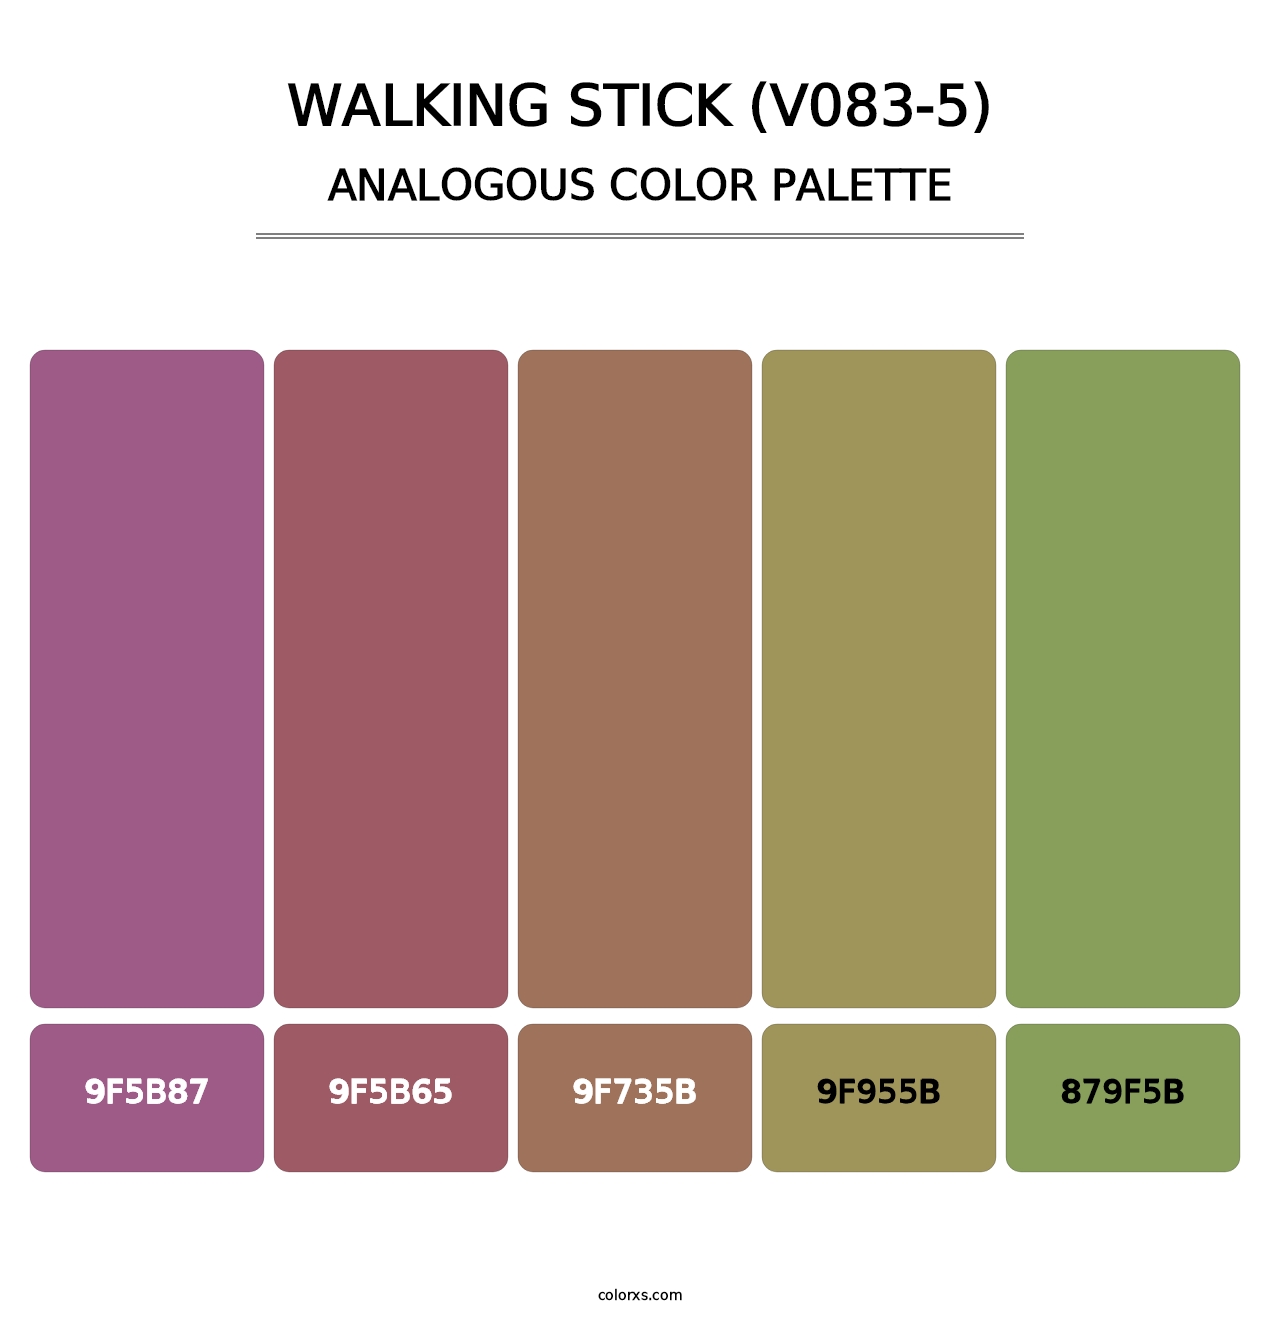 Walking Stick (V083-5) - Analogous Color Palette